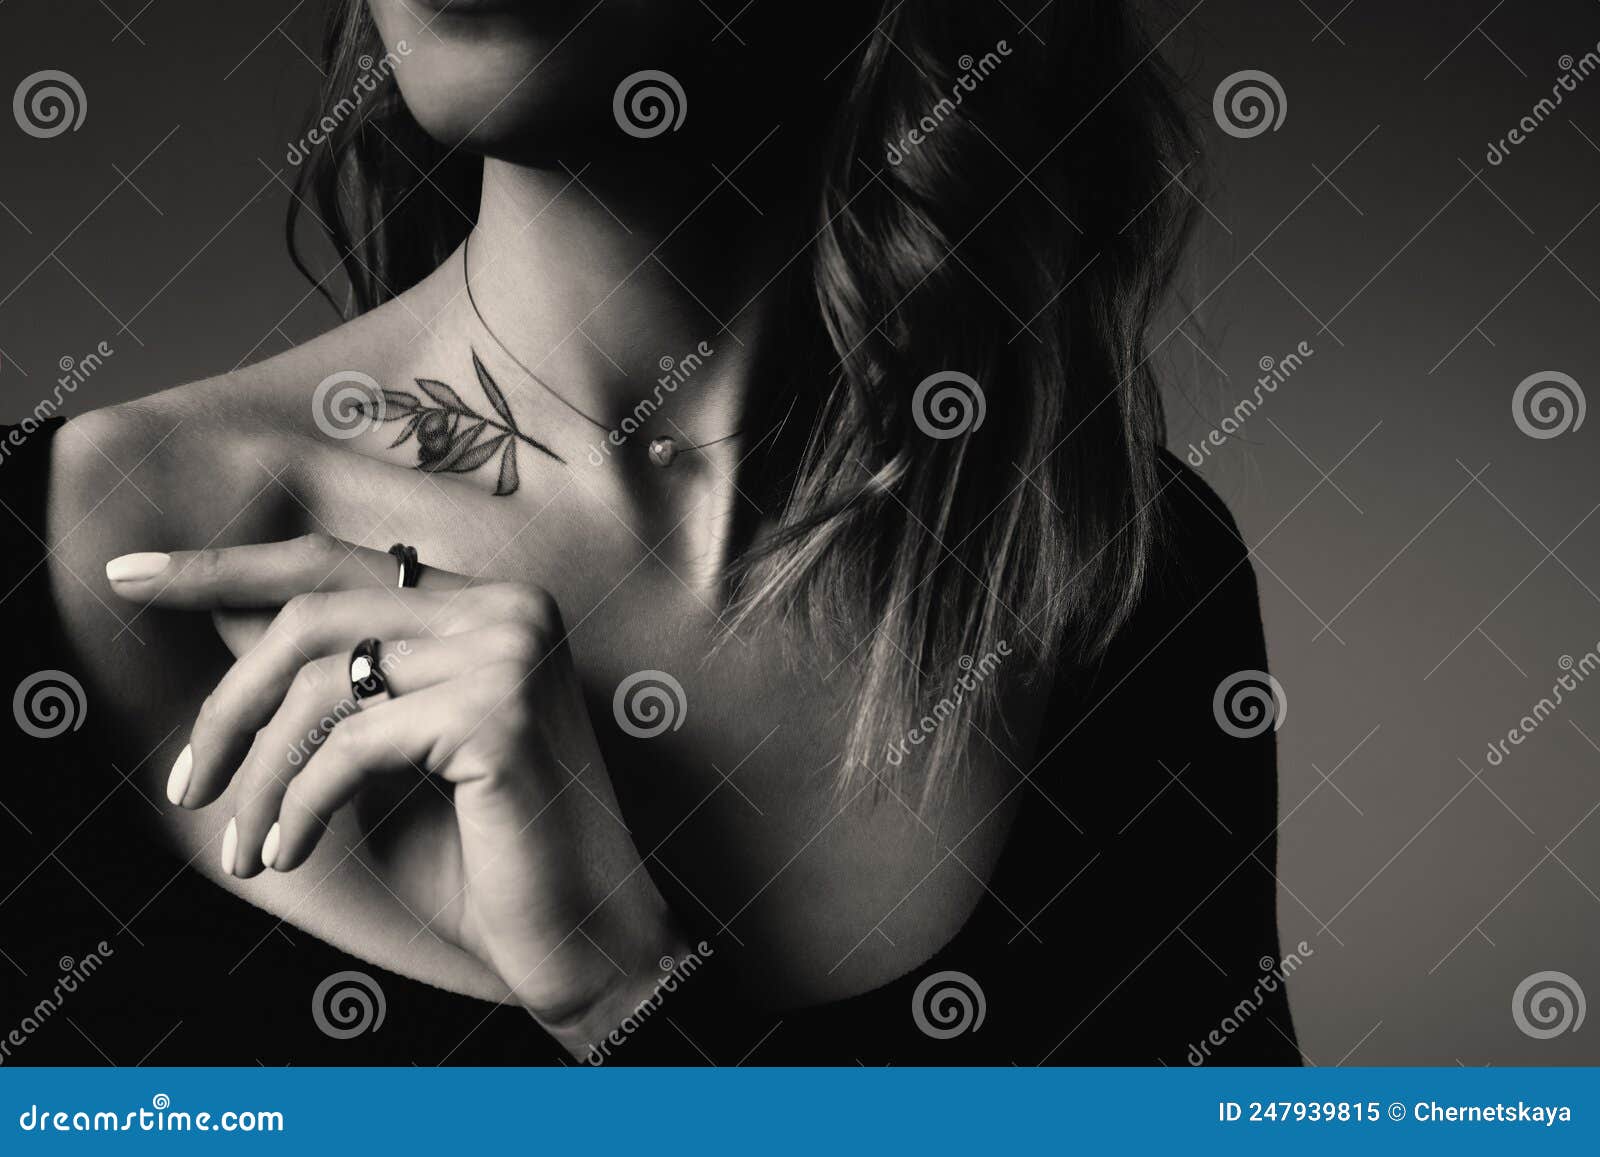 Small Waterproof Temporary Tattoo Sticker Snake Black Flower Sword Scorpion  Dark Women Body Art Wrist Neck